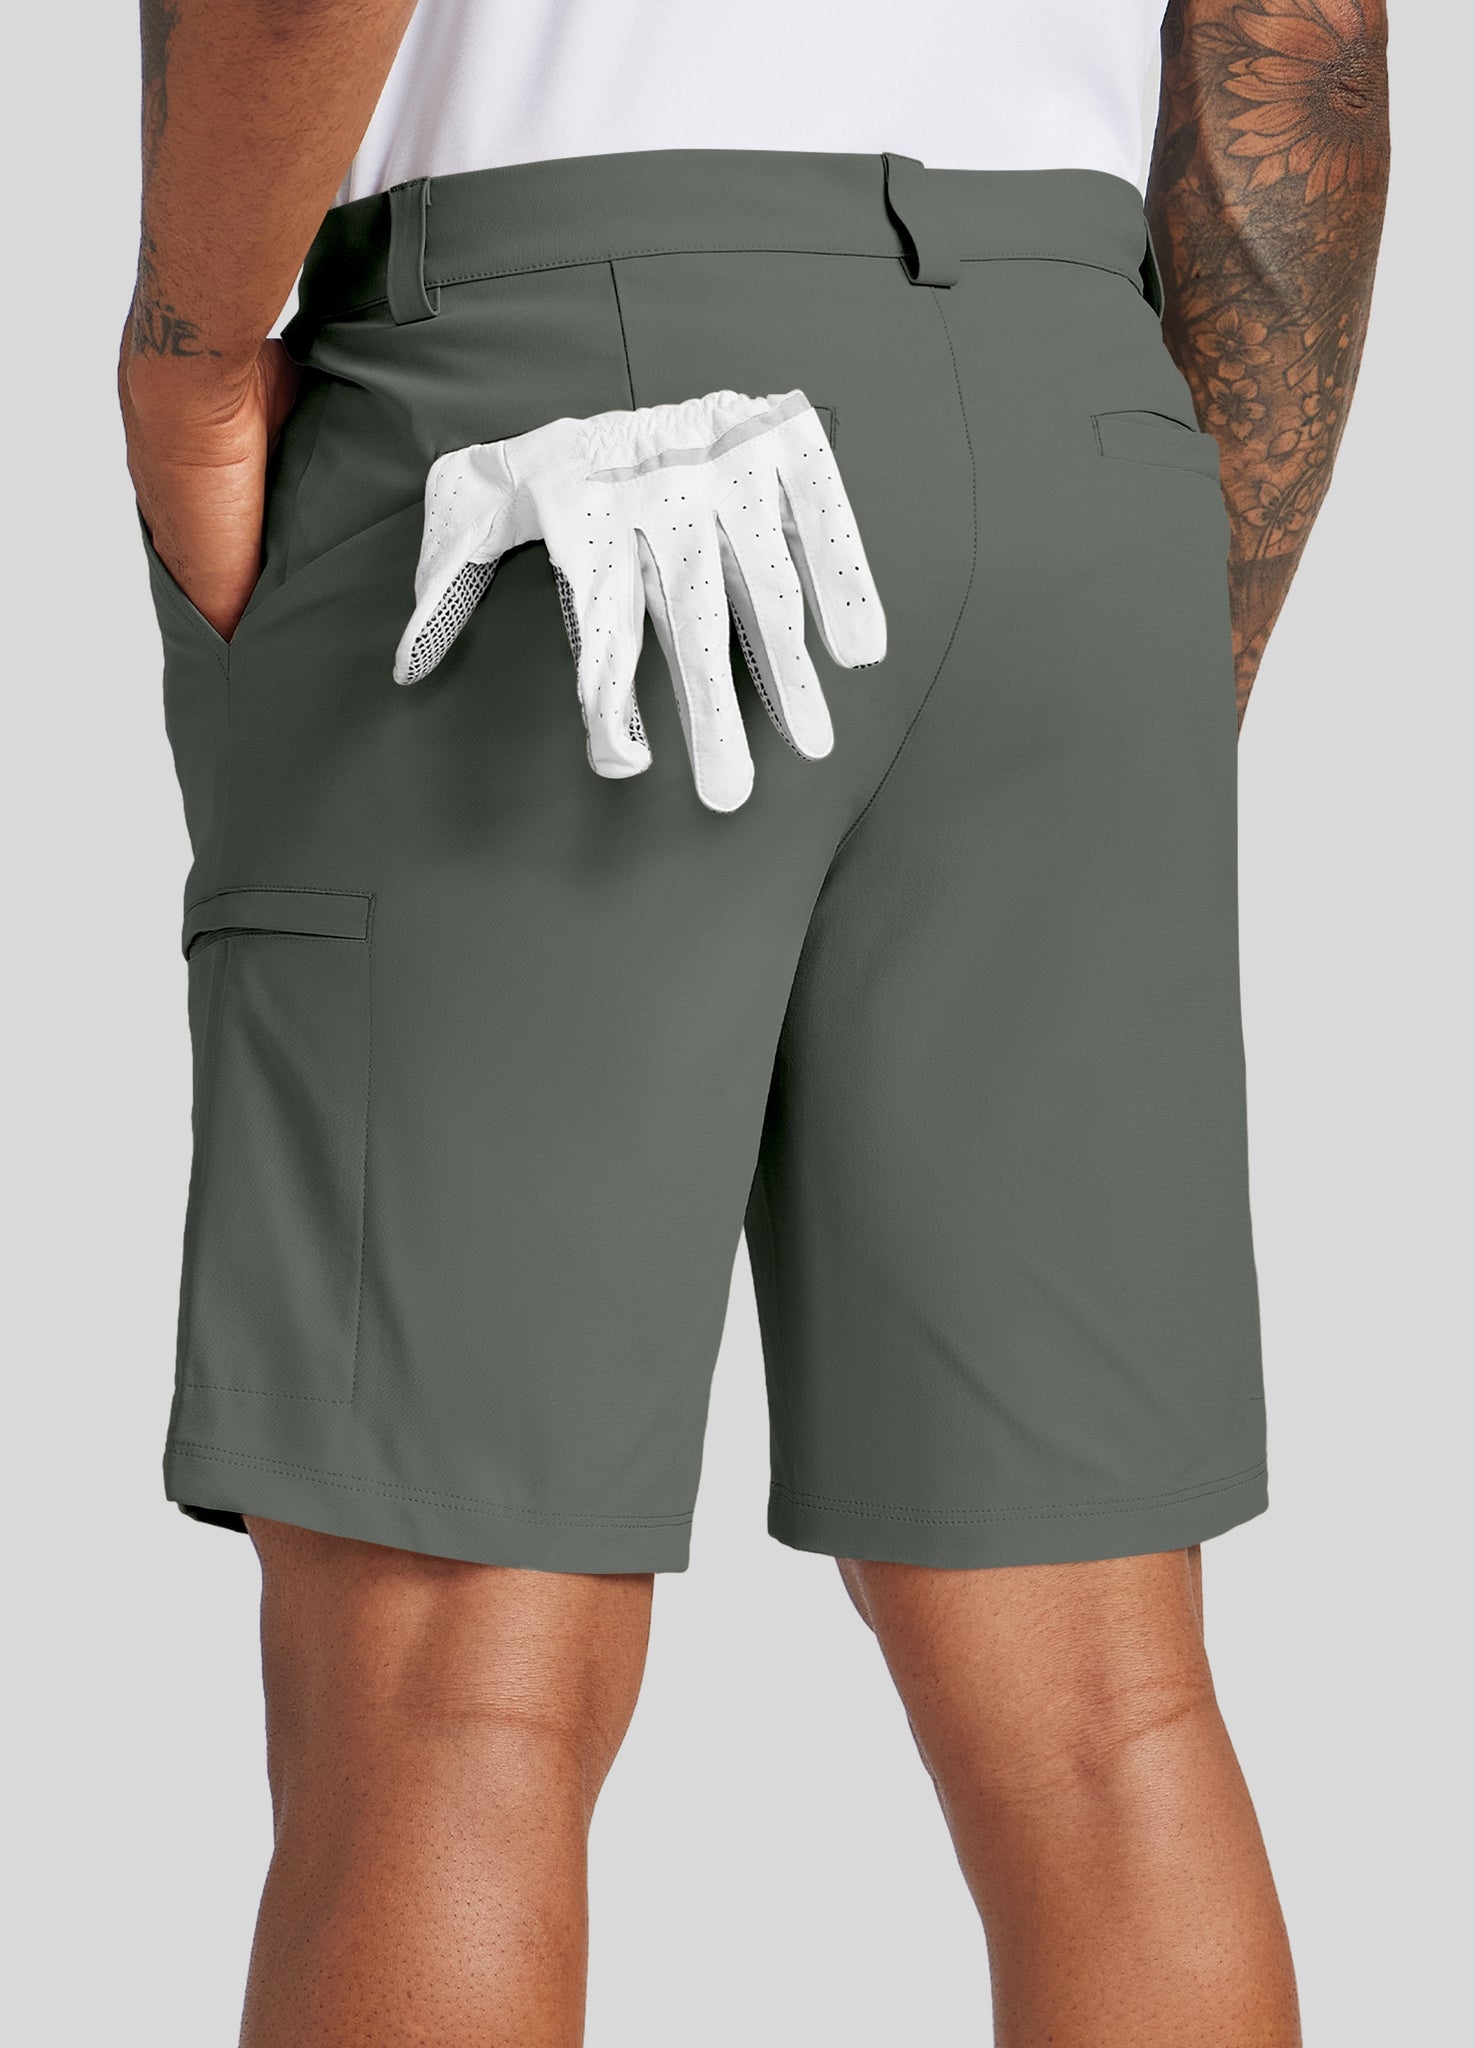 Men's Active Golf Shorts 9 Inseam